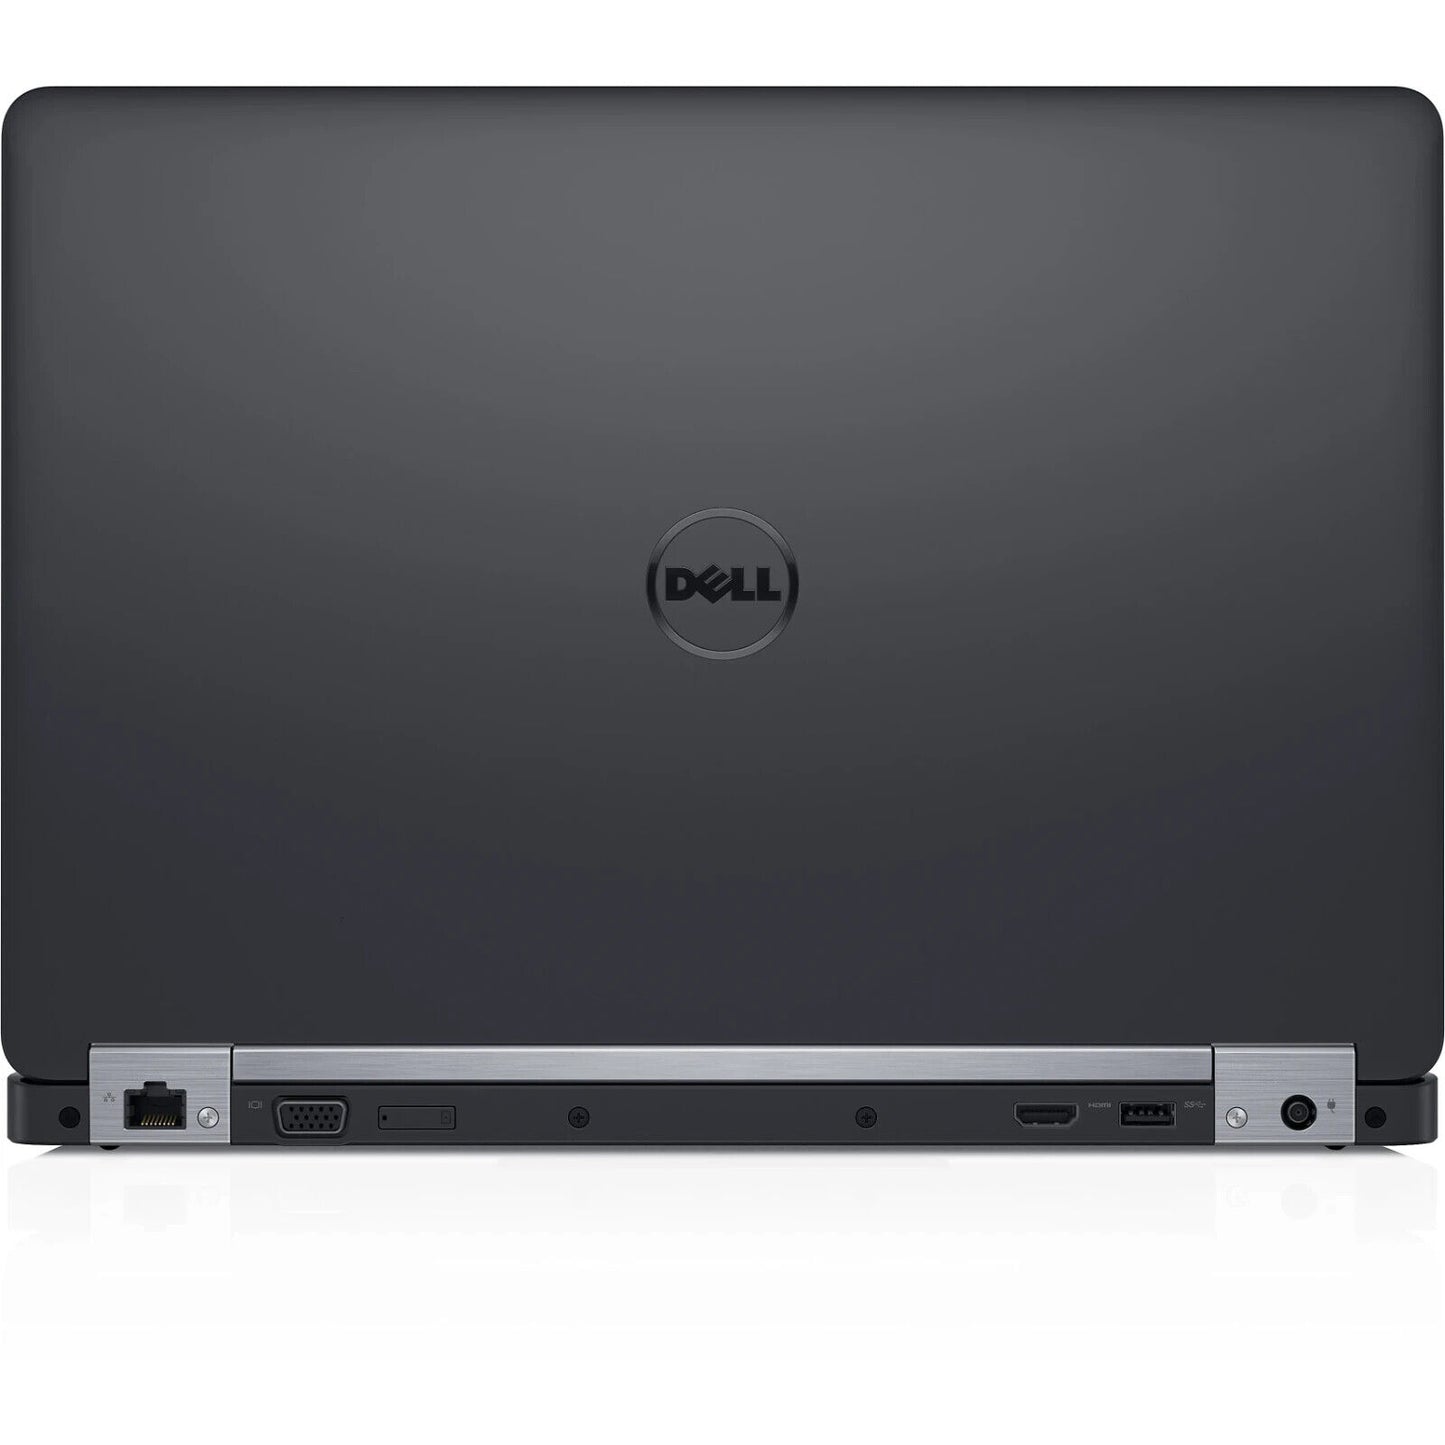 Dell Latitude E5470 - Intel i5-6300U - 500 GB Hard Drive - 8 GB RAM